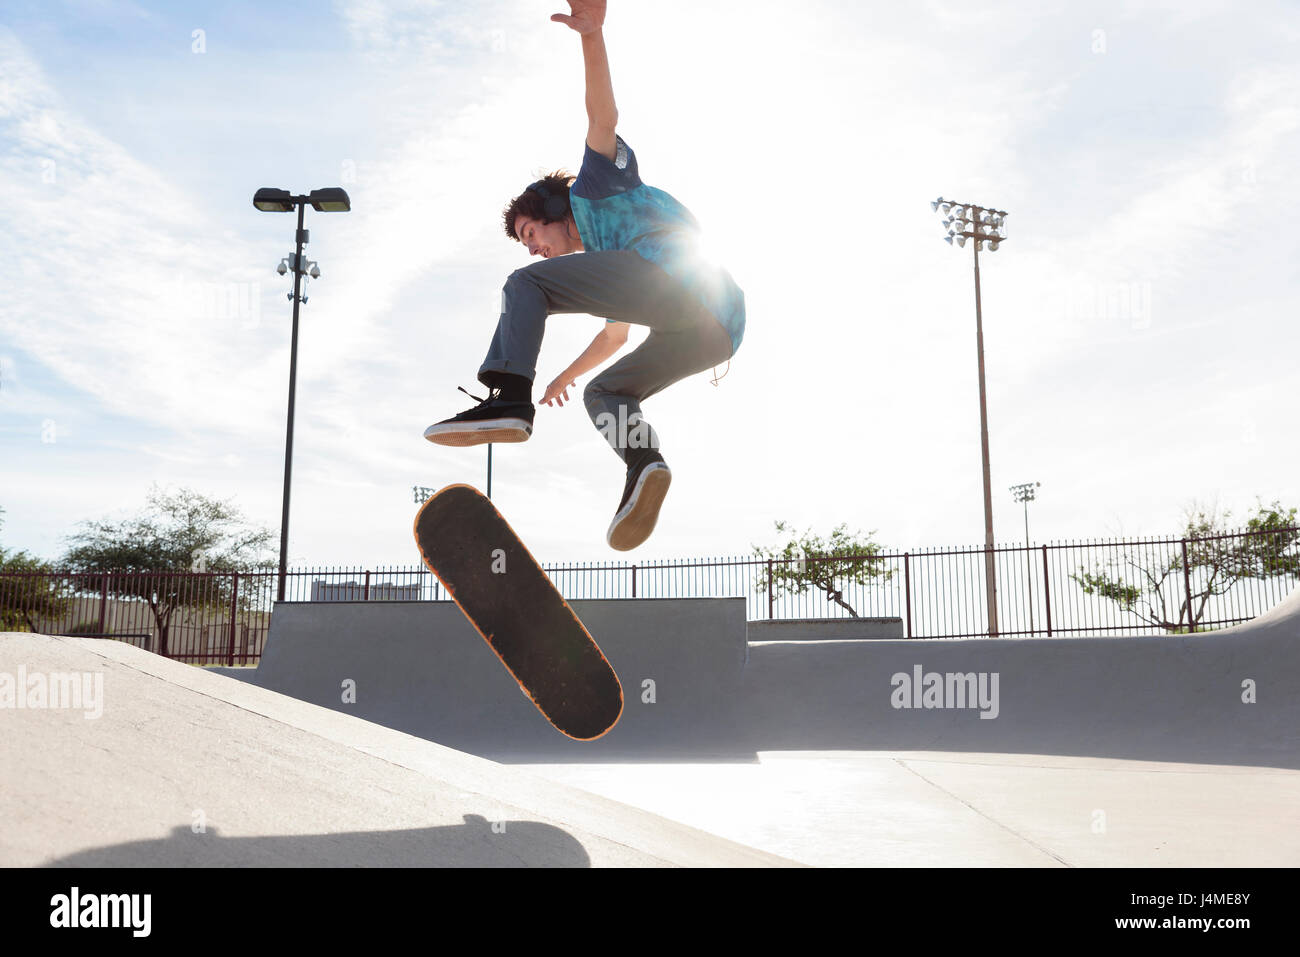 Hispanic man performing mid-air trick on skateboard Stock Photo